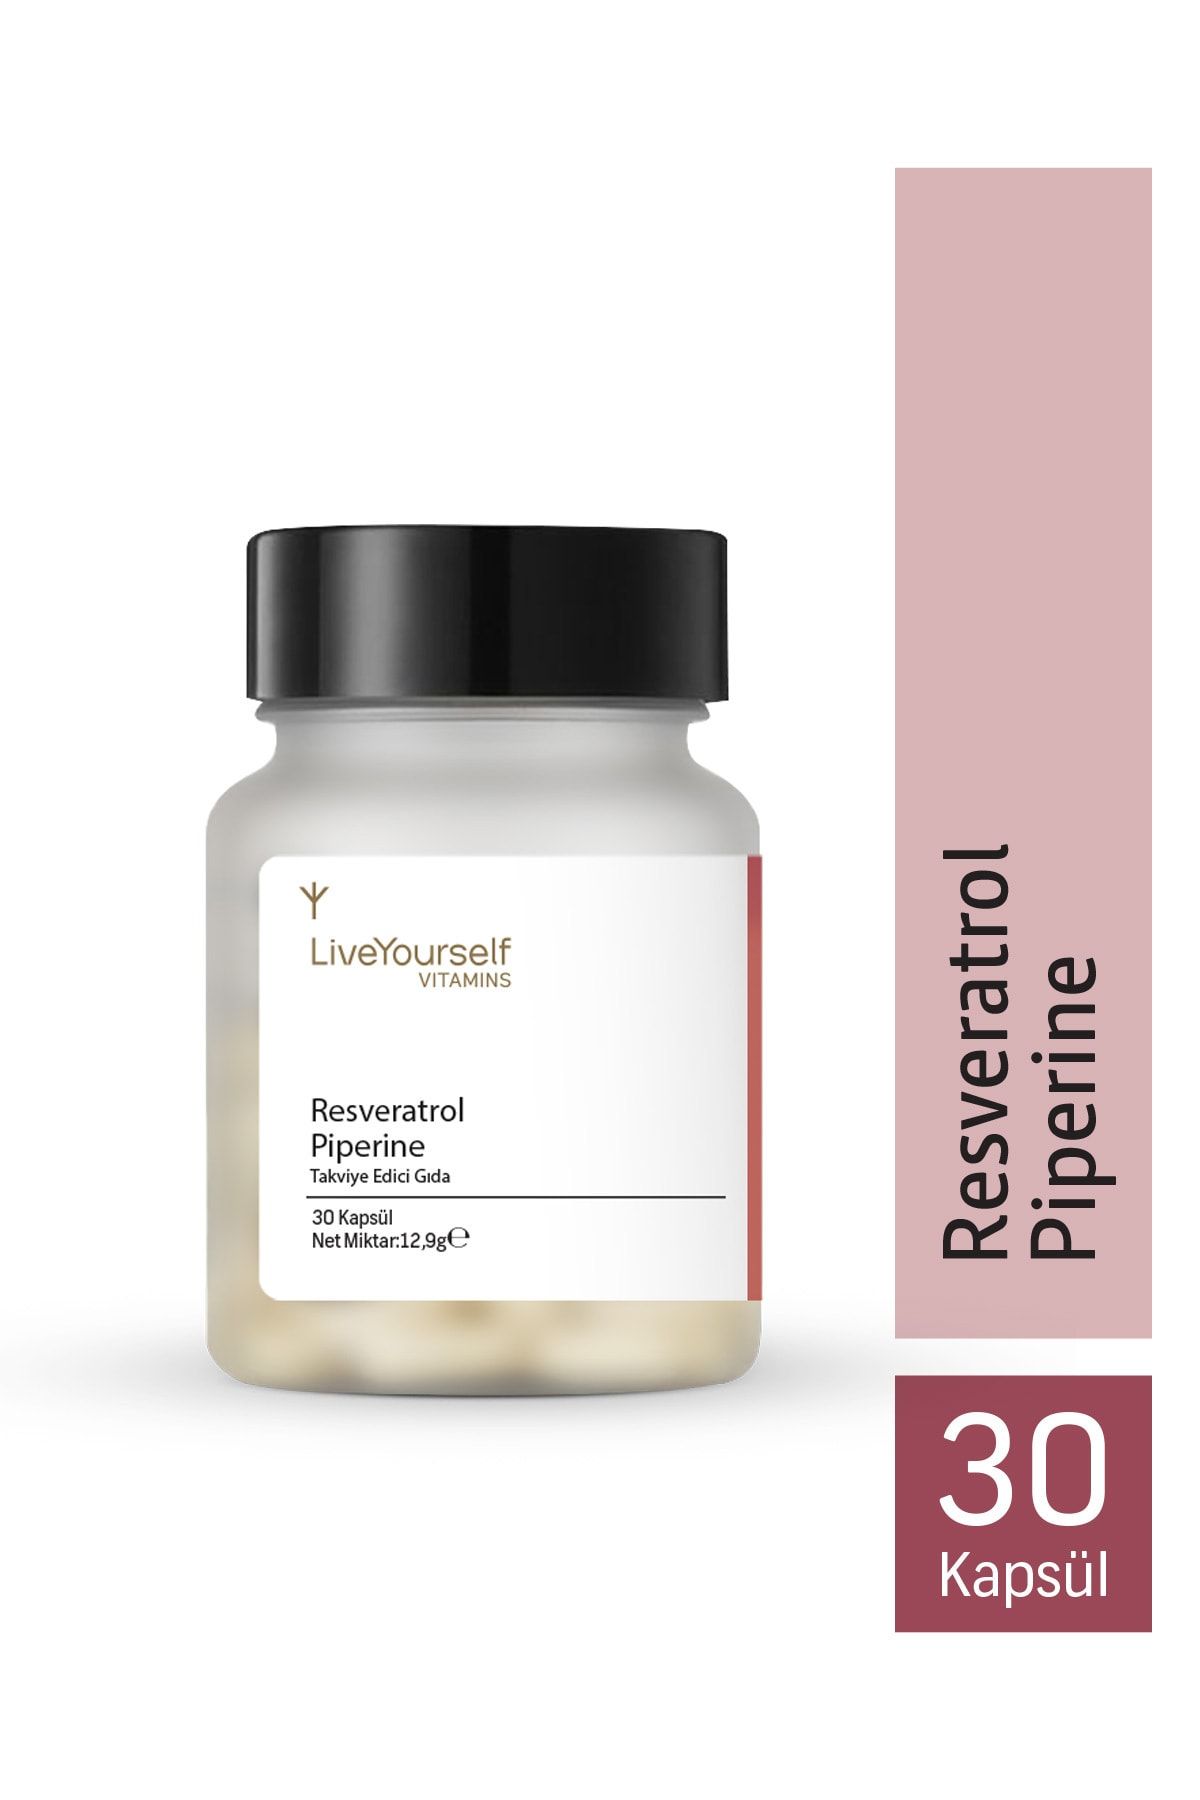 Live Yourself Resveratrol Piperine